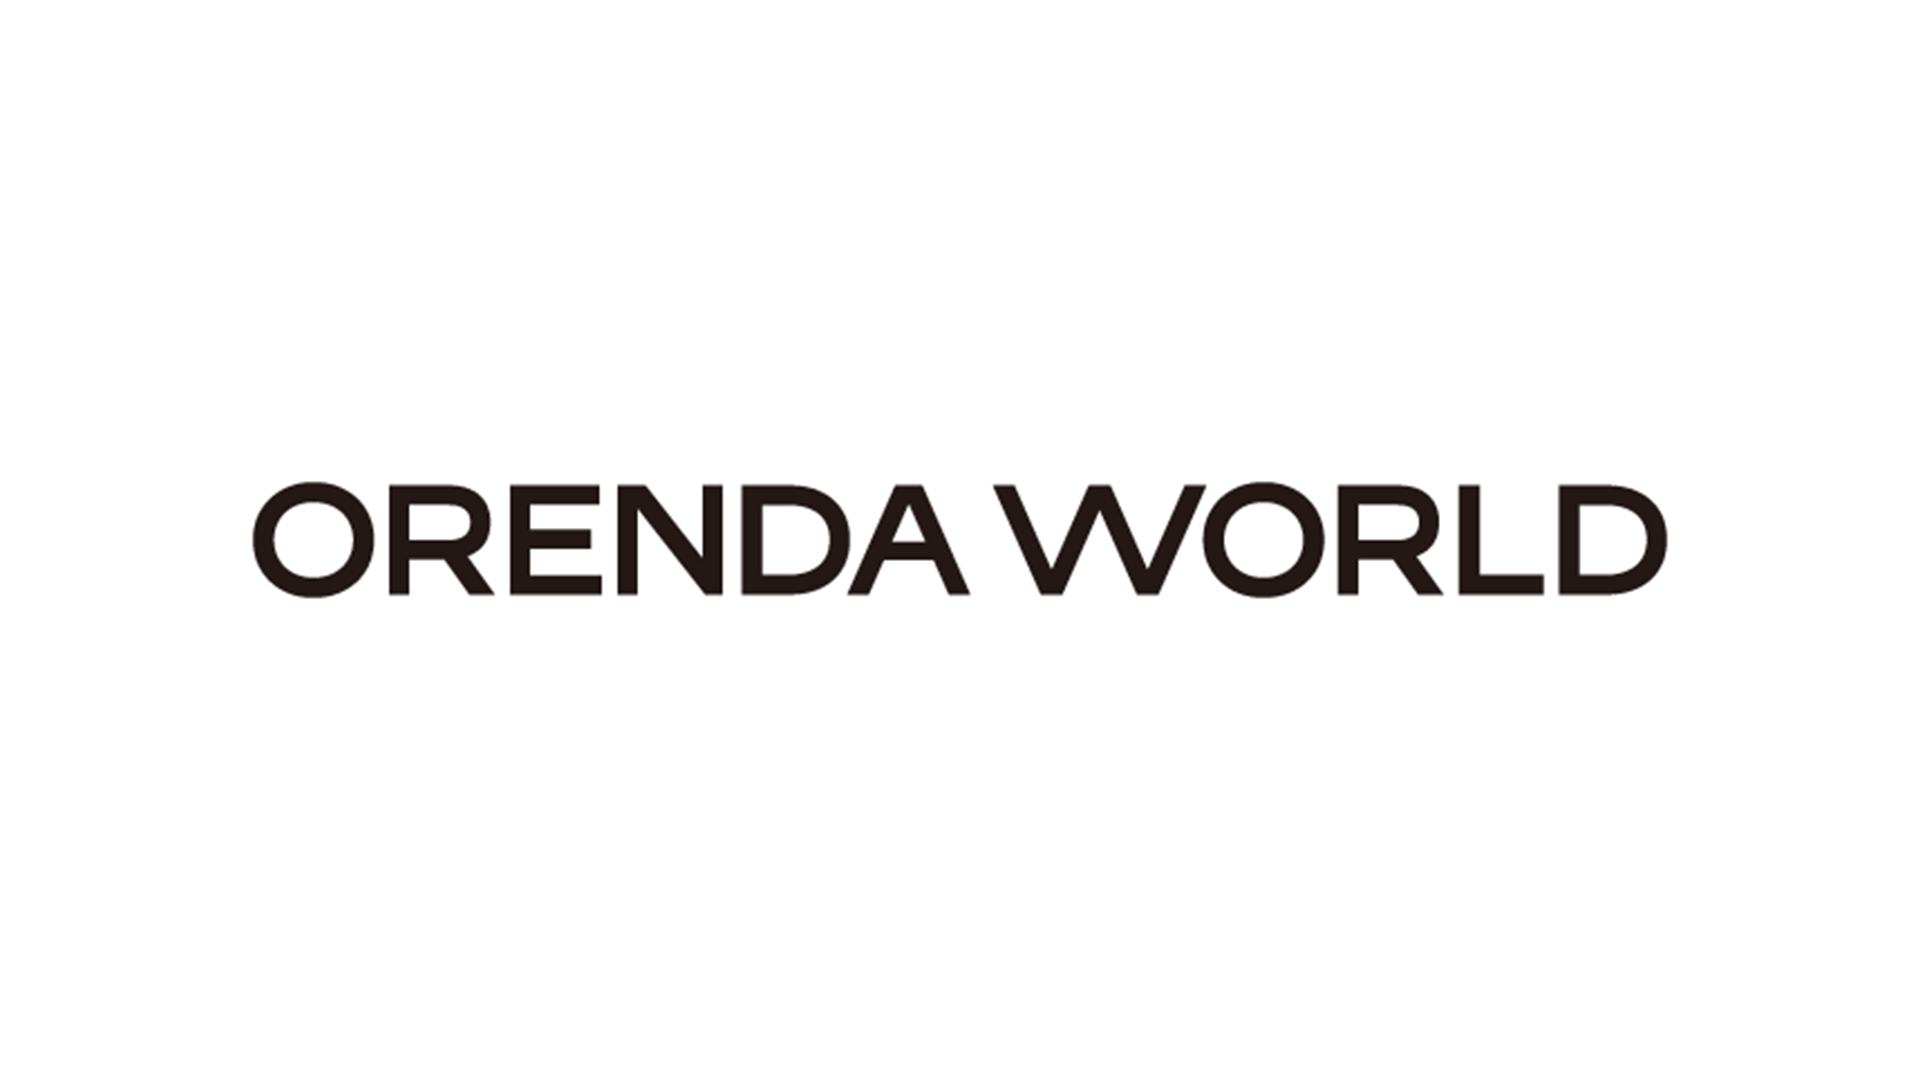 株式会社 ORENDA WORLD、資金調達を実施